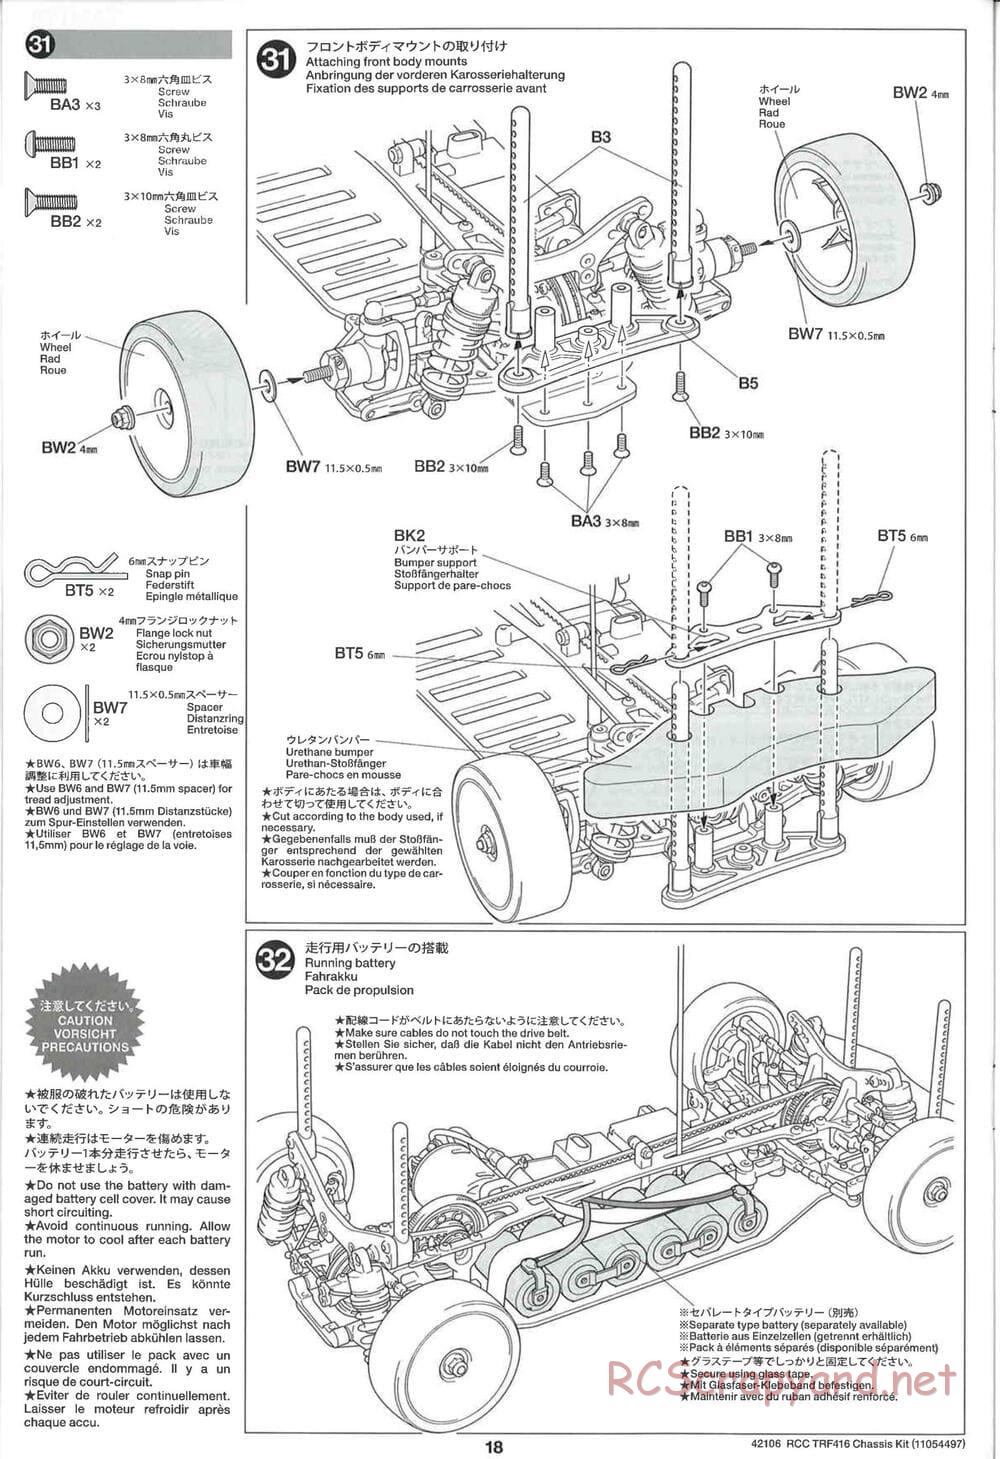 Tamiya - TRF416 Chassis - Manual - Page 18